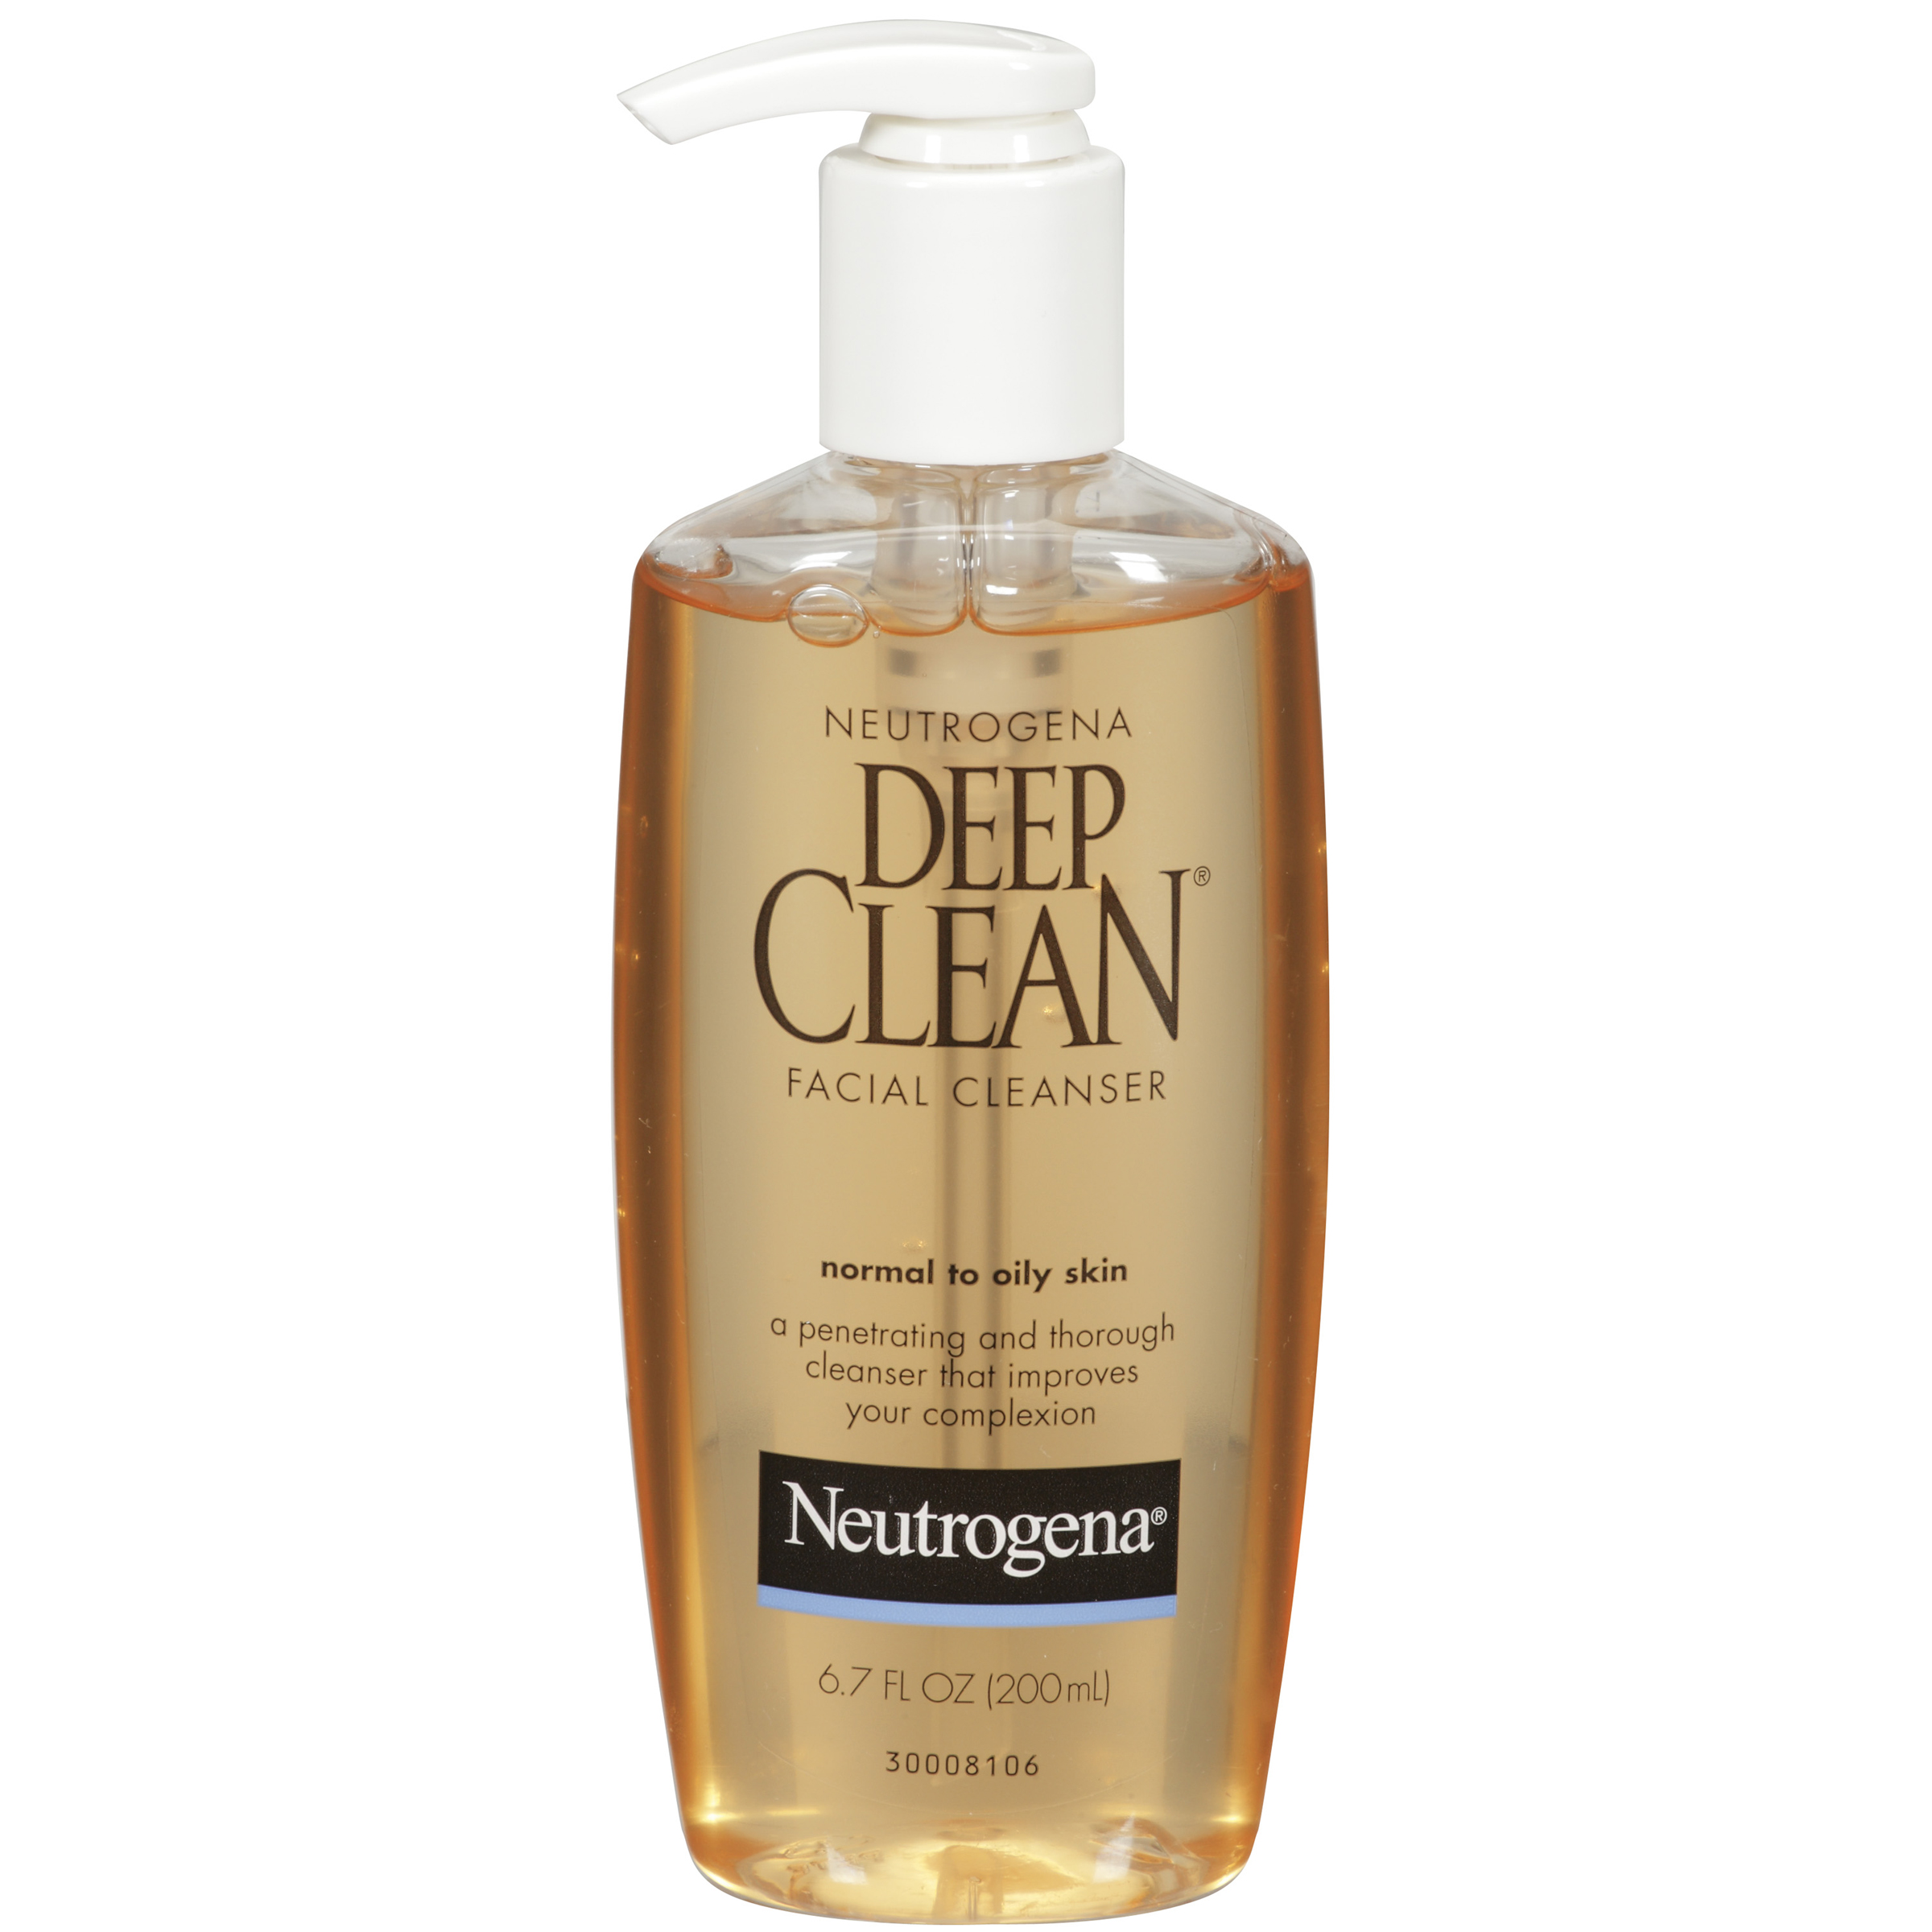 deep clean facial cleanser Nuetrogena